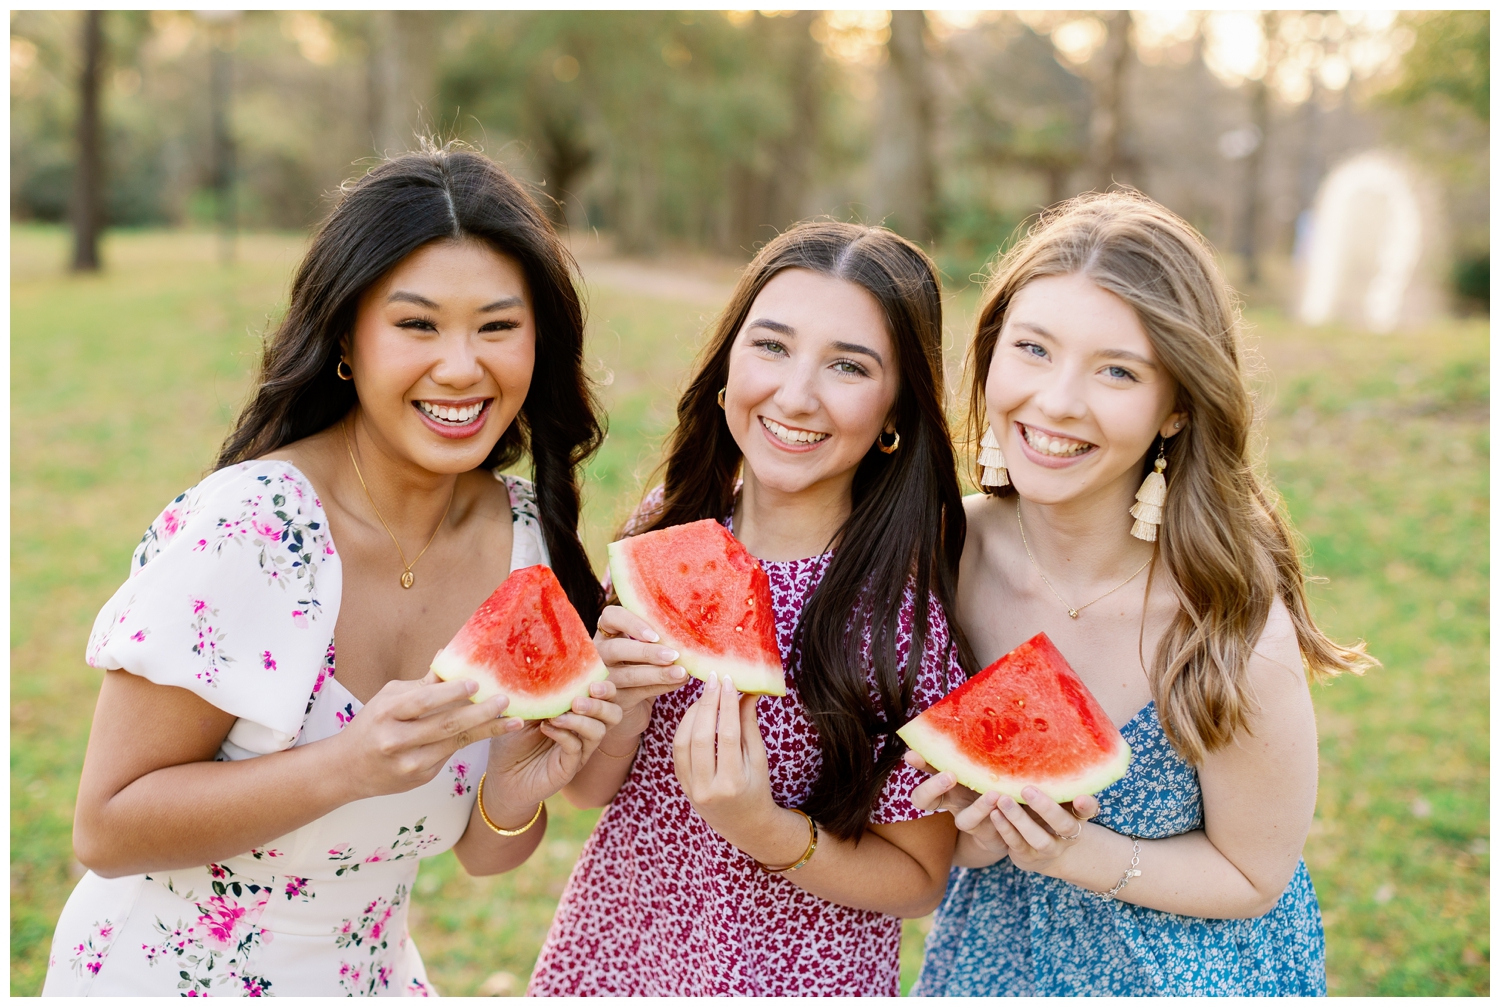 Houston high school senior girls eating watermelon at outdoor picnic